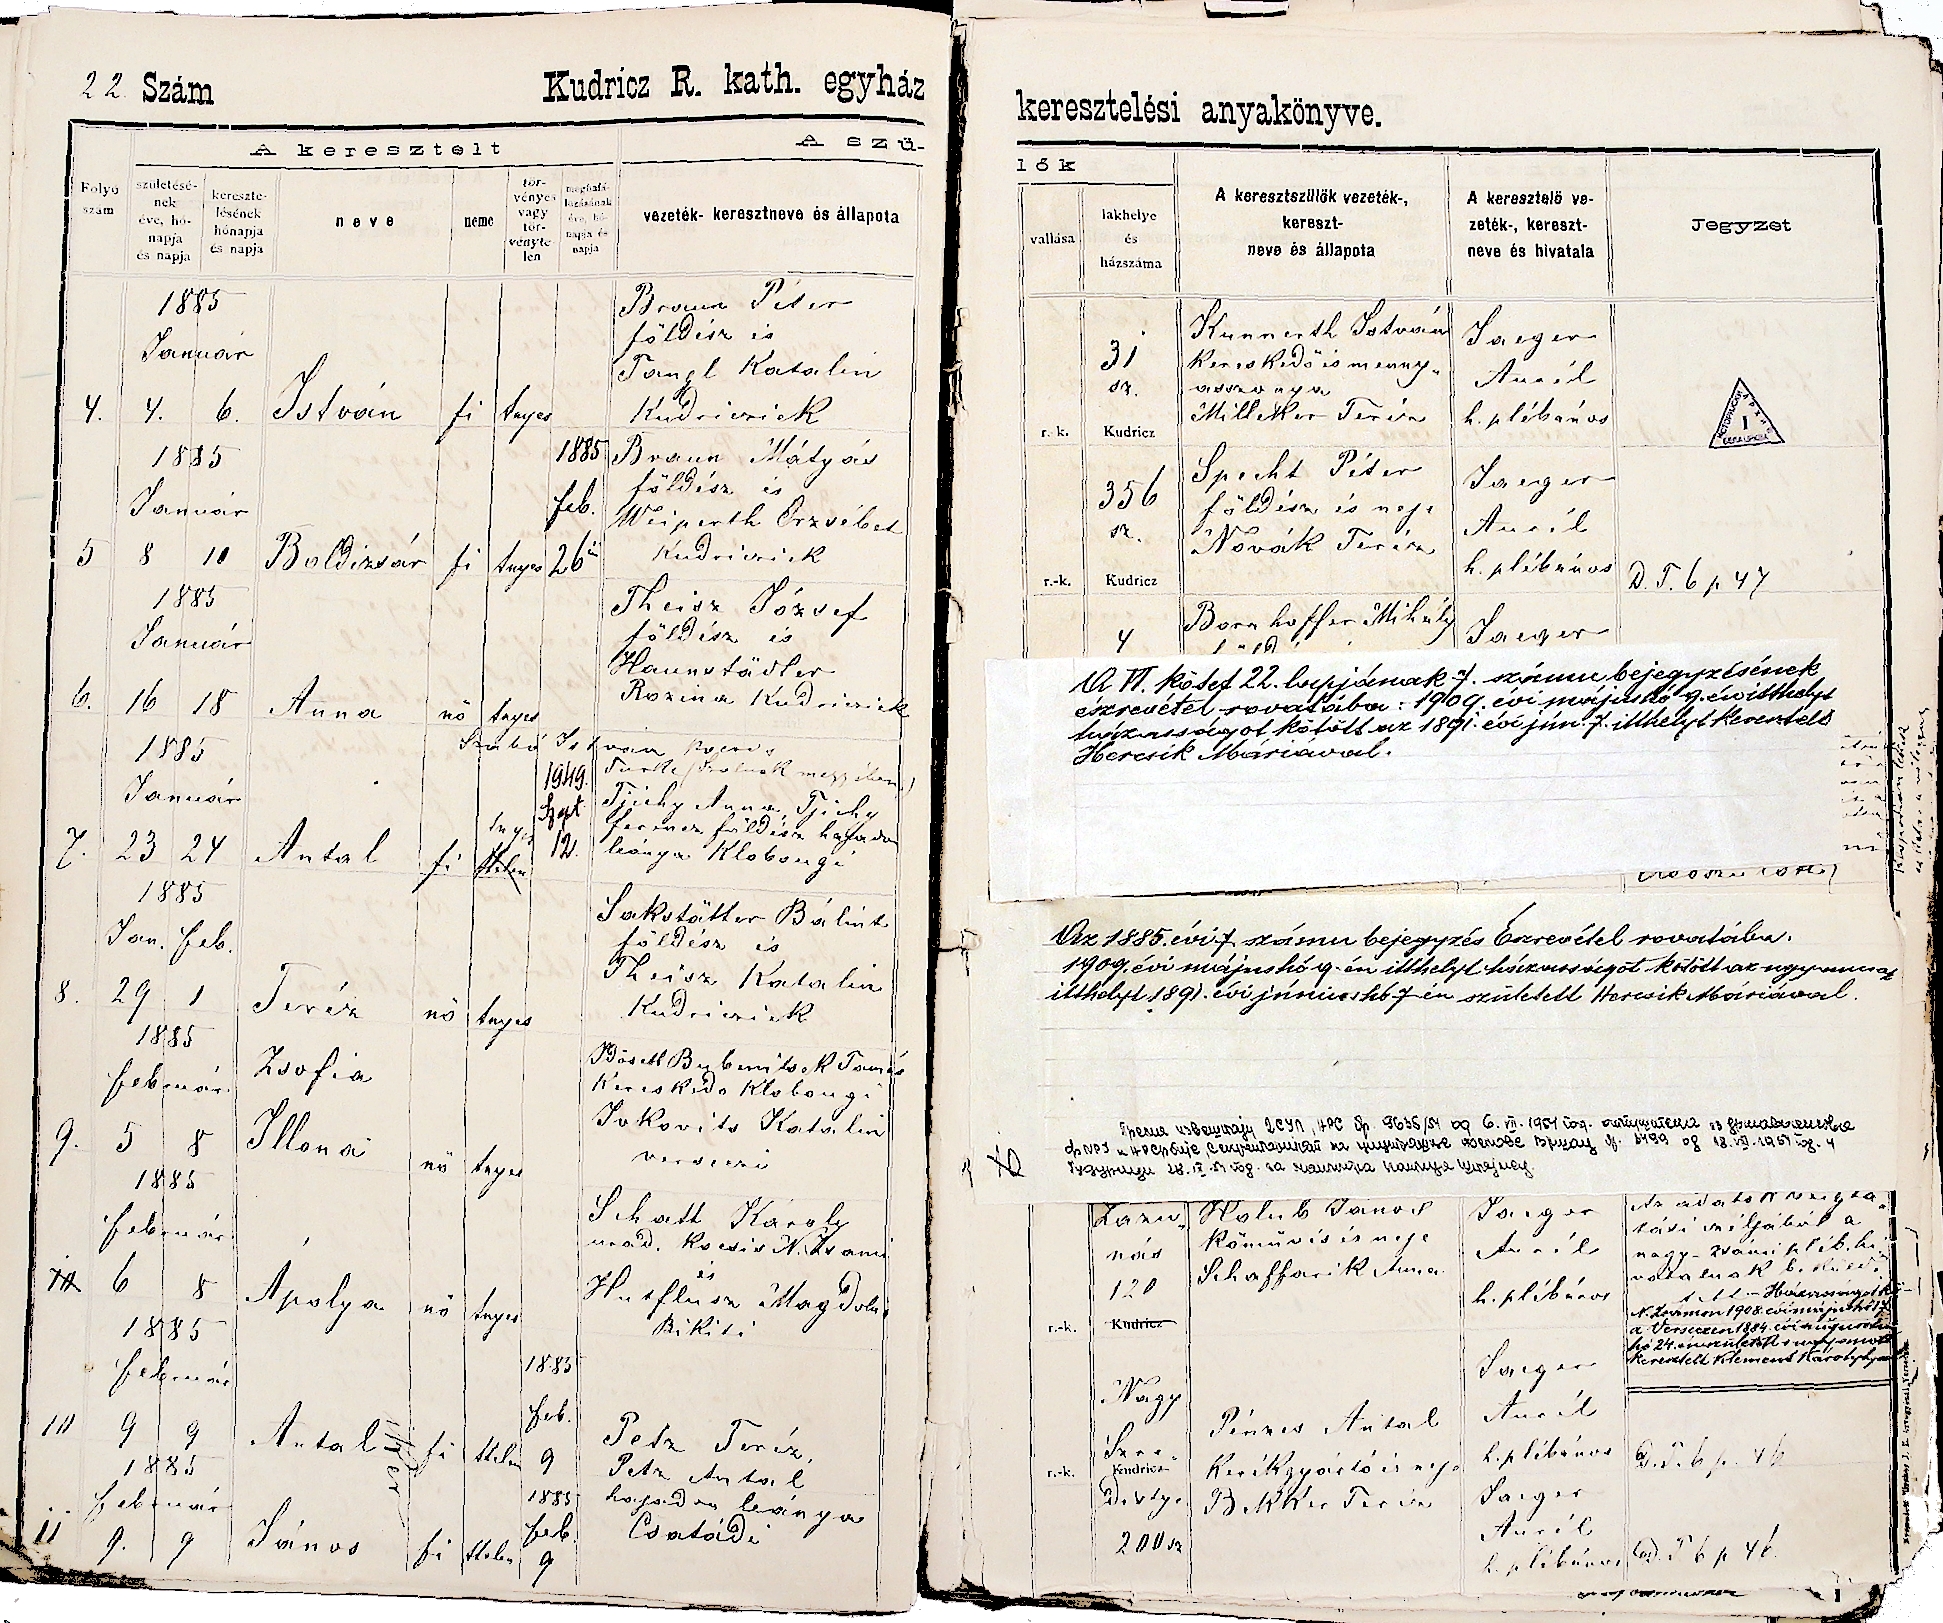 images/church_records/BIRTHS/1884-1899B/1885/022